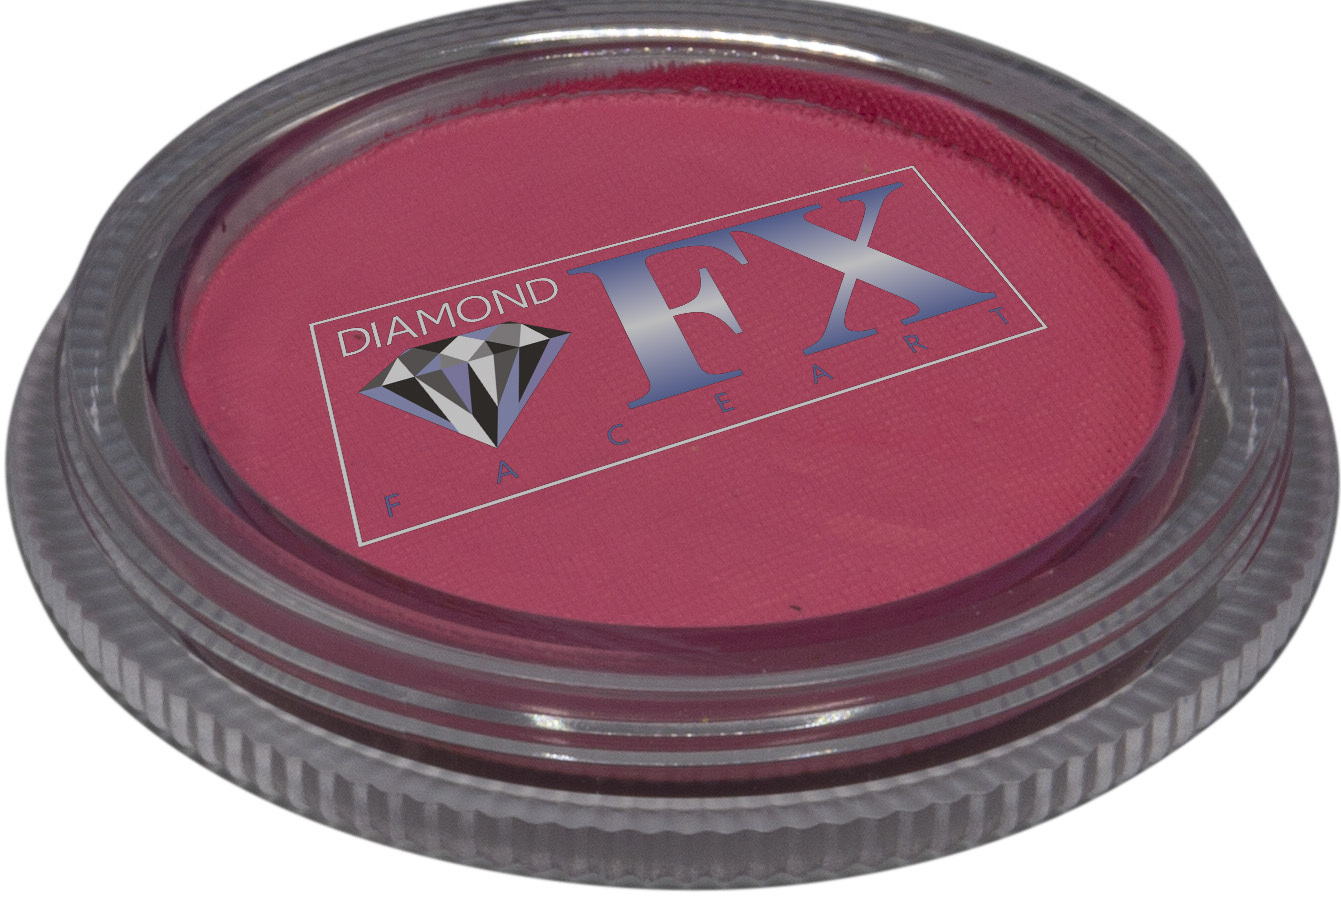 Diamond FX Fuchsia Pink 30g - Small Image